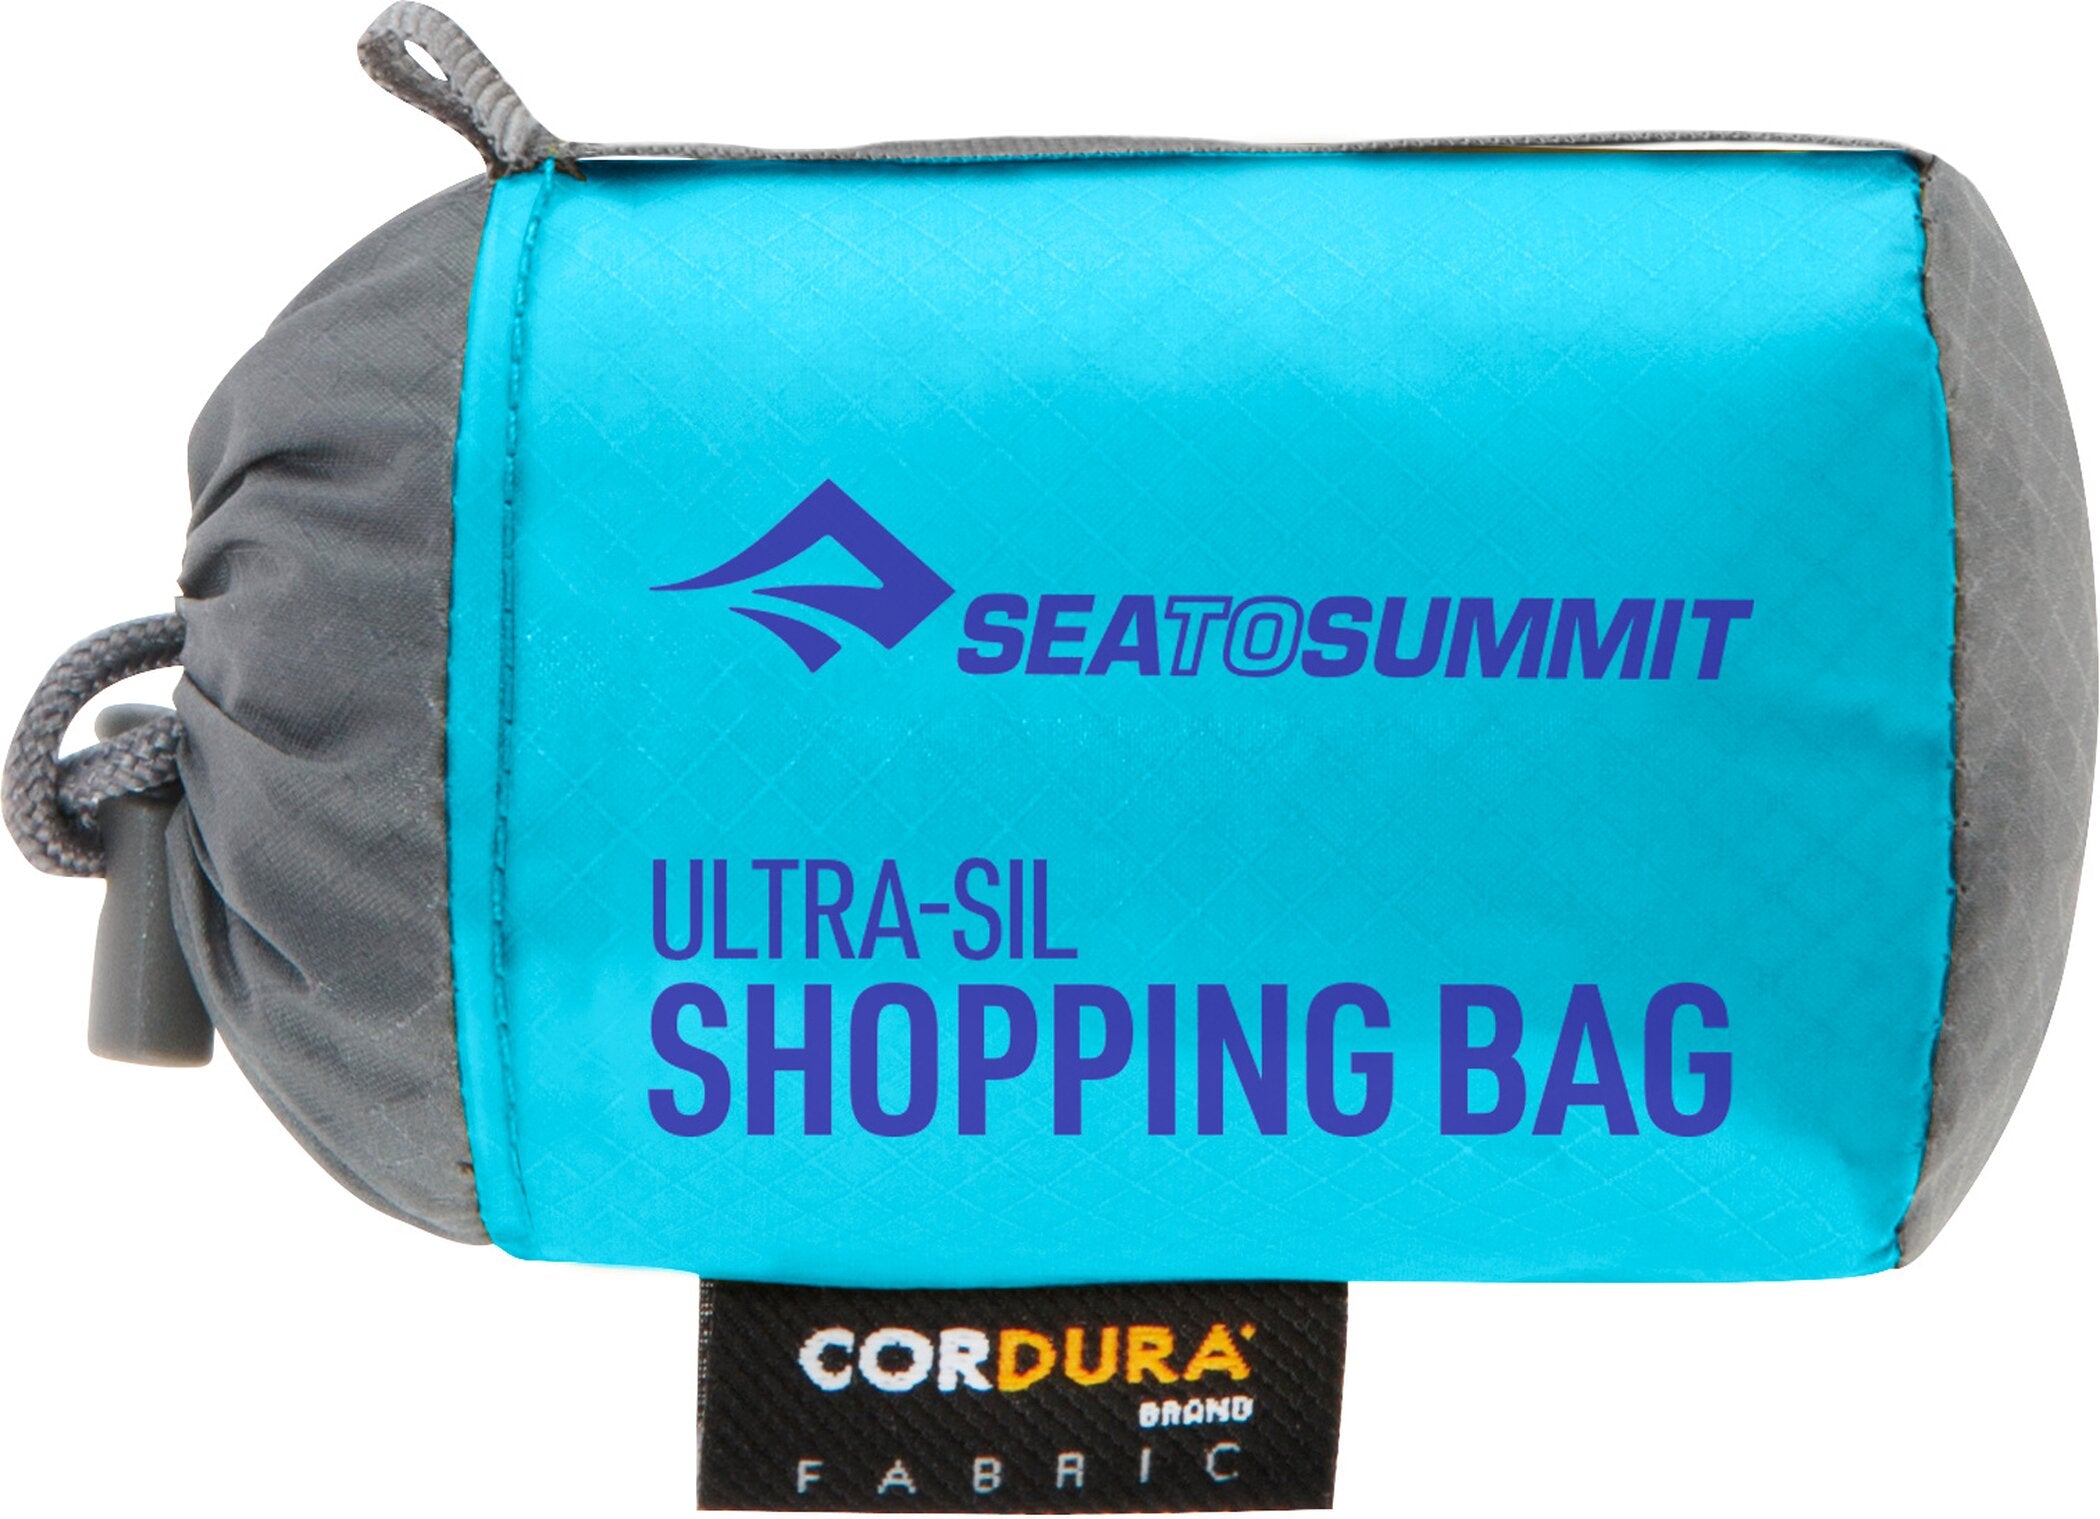 Tasche Ultra-Sil Shopping Bag